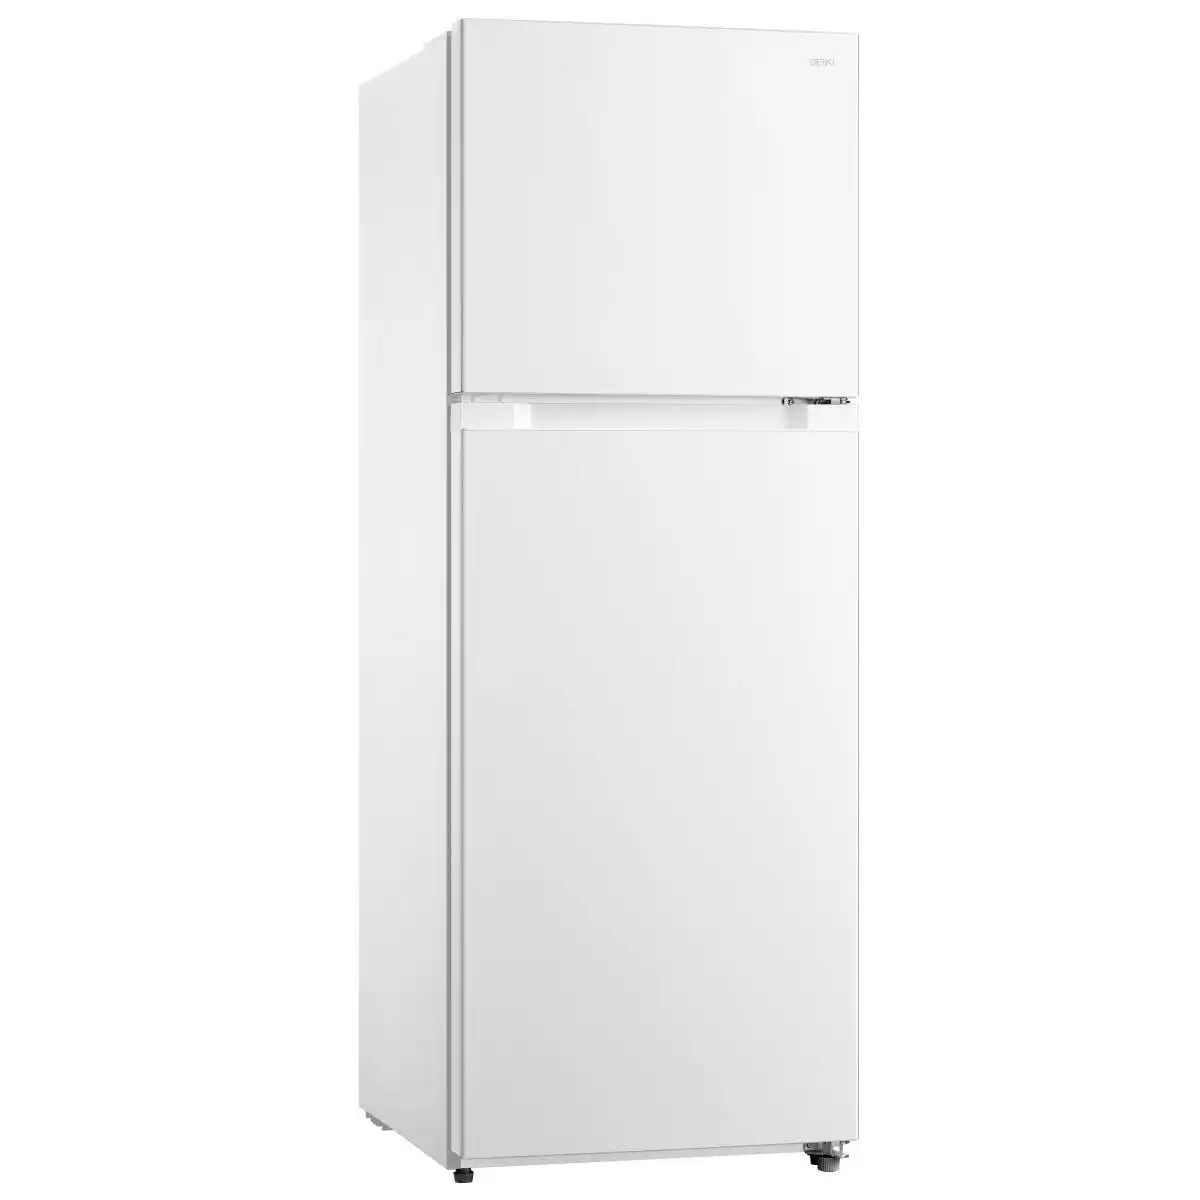 Seiki 314L Top Mount Refrigerator